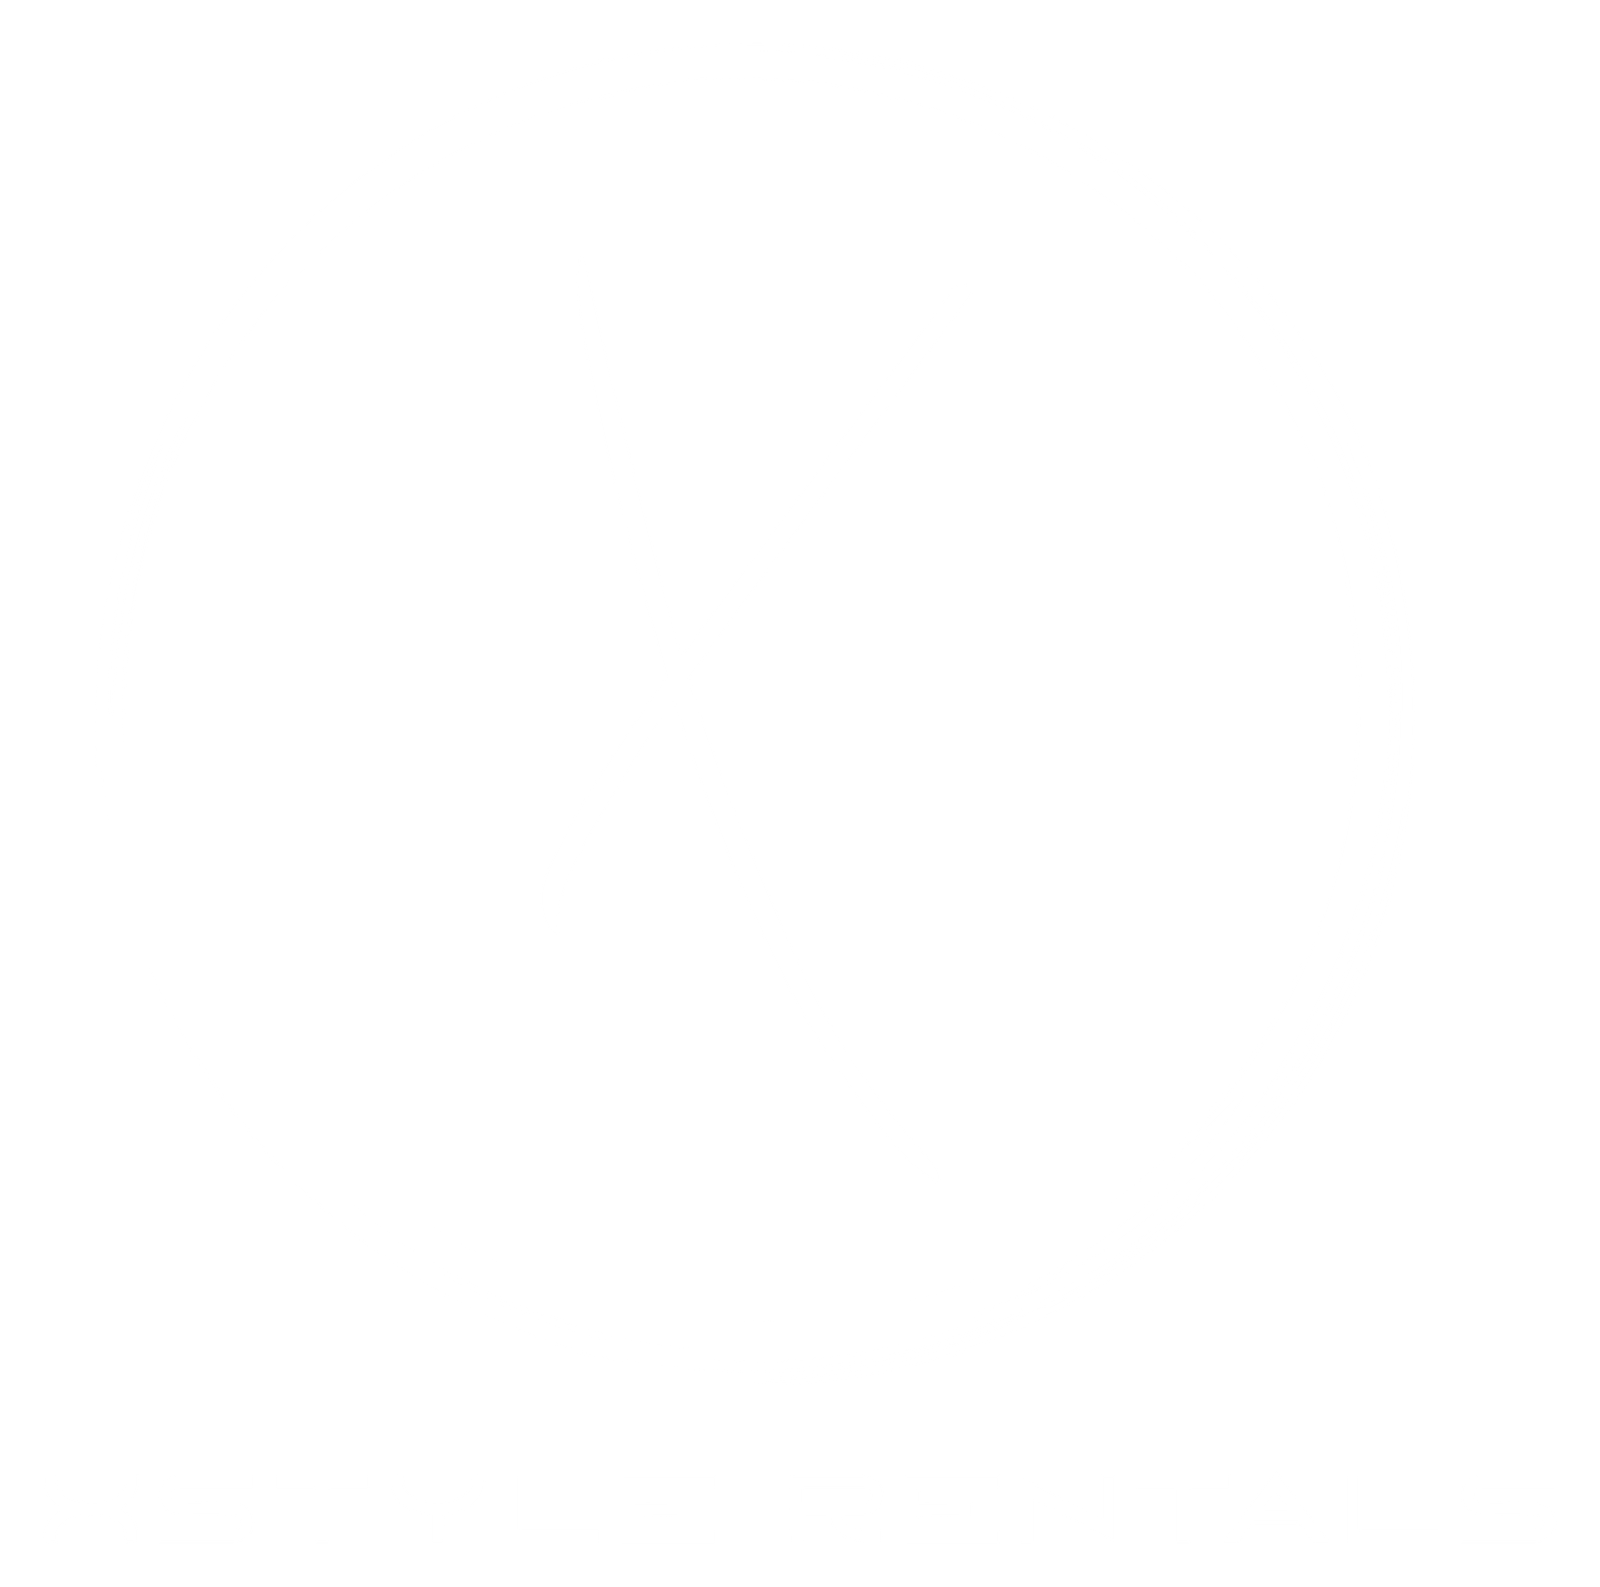 X white logo - no background